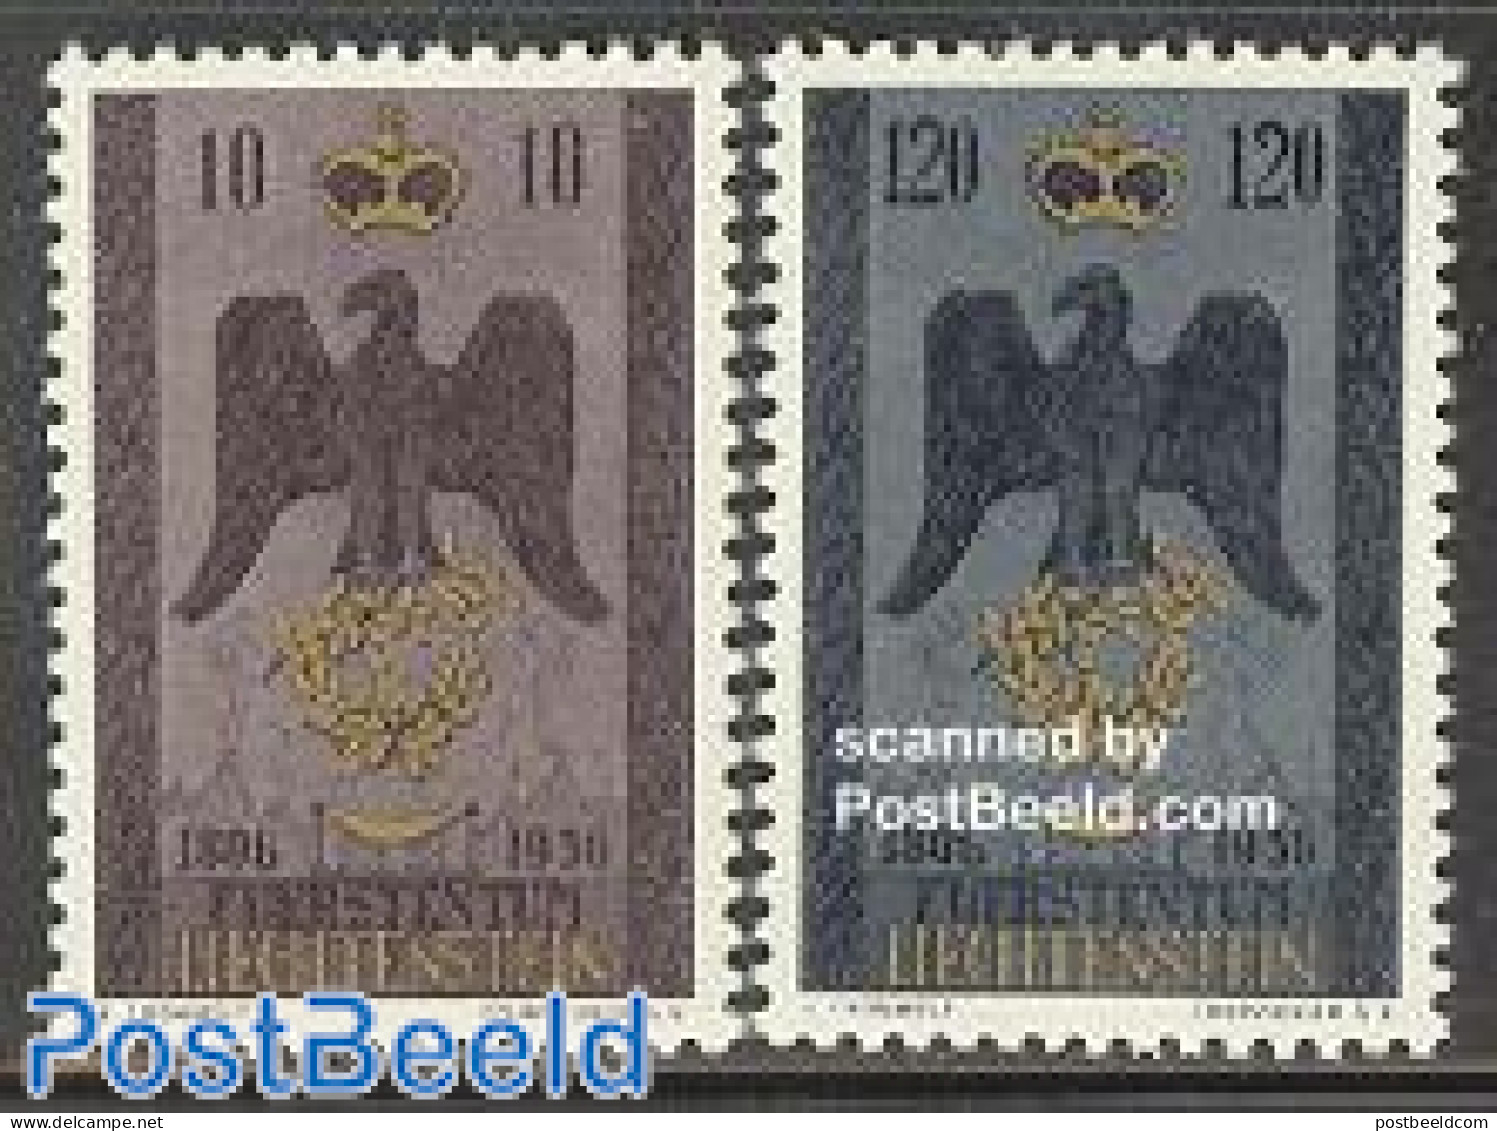 Liechtenstein 1956 Souvereinty 2v, Unused (hinged), History - Coat Of Arms - Ongebruikt